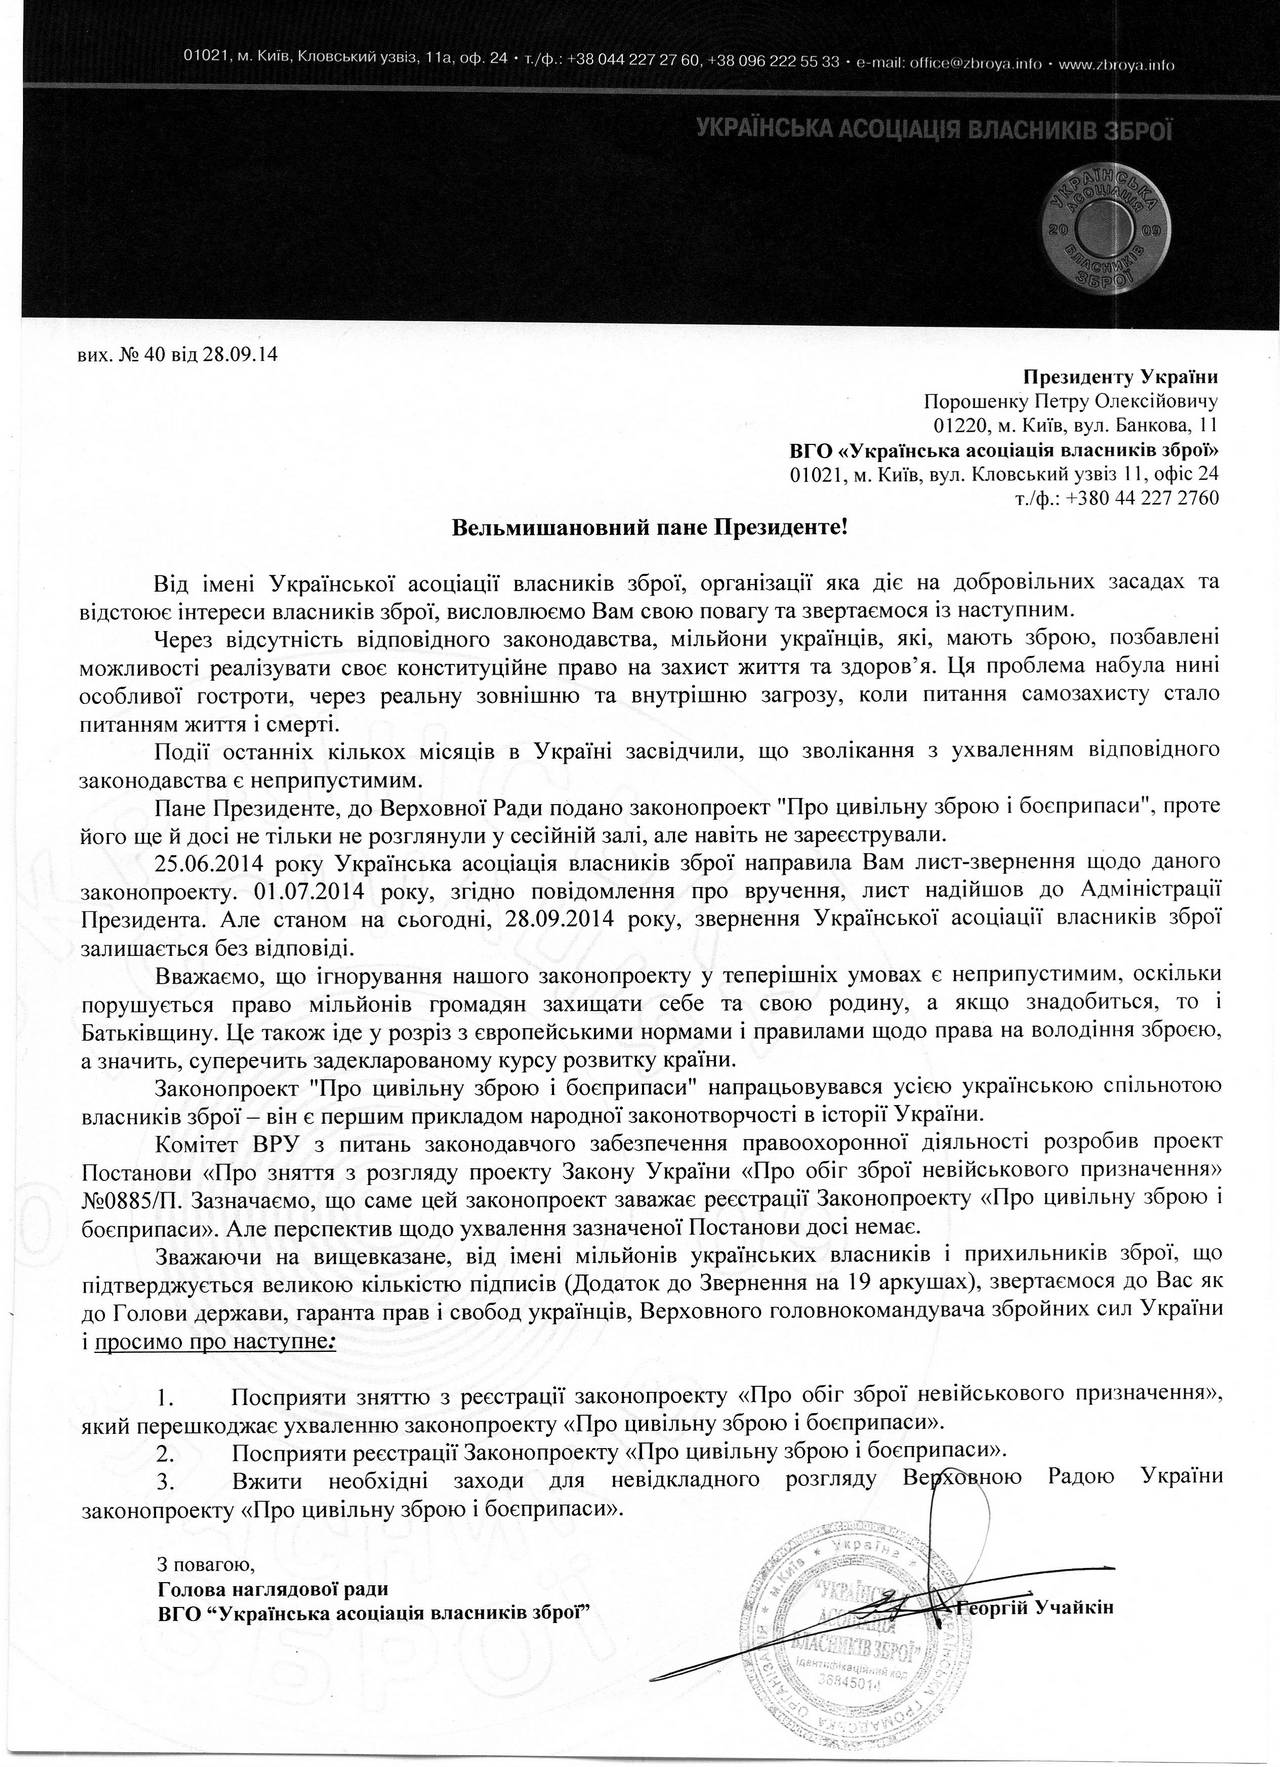 Letter to the President of Ukraine